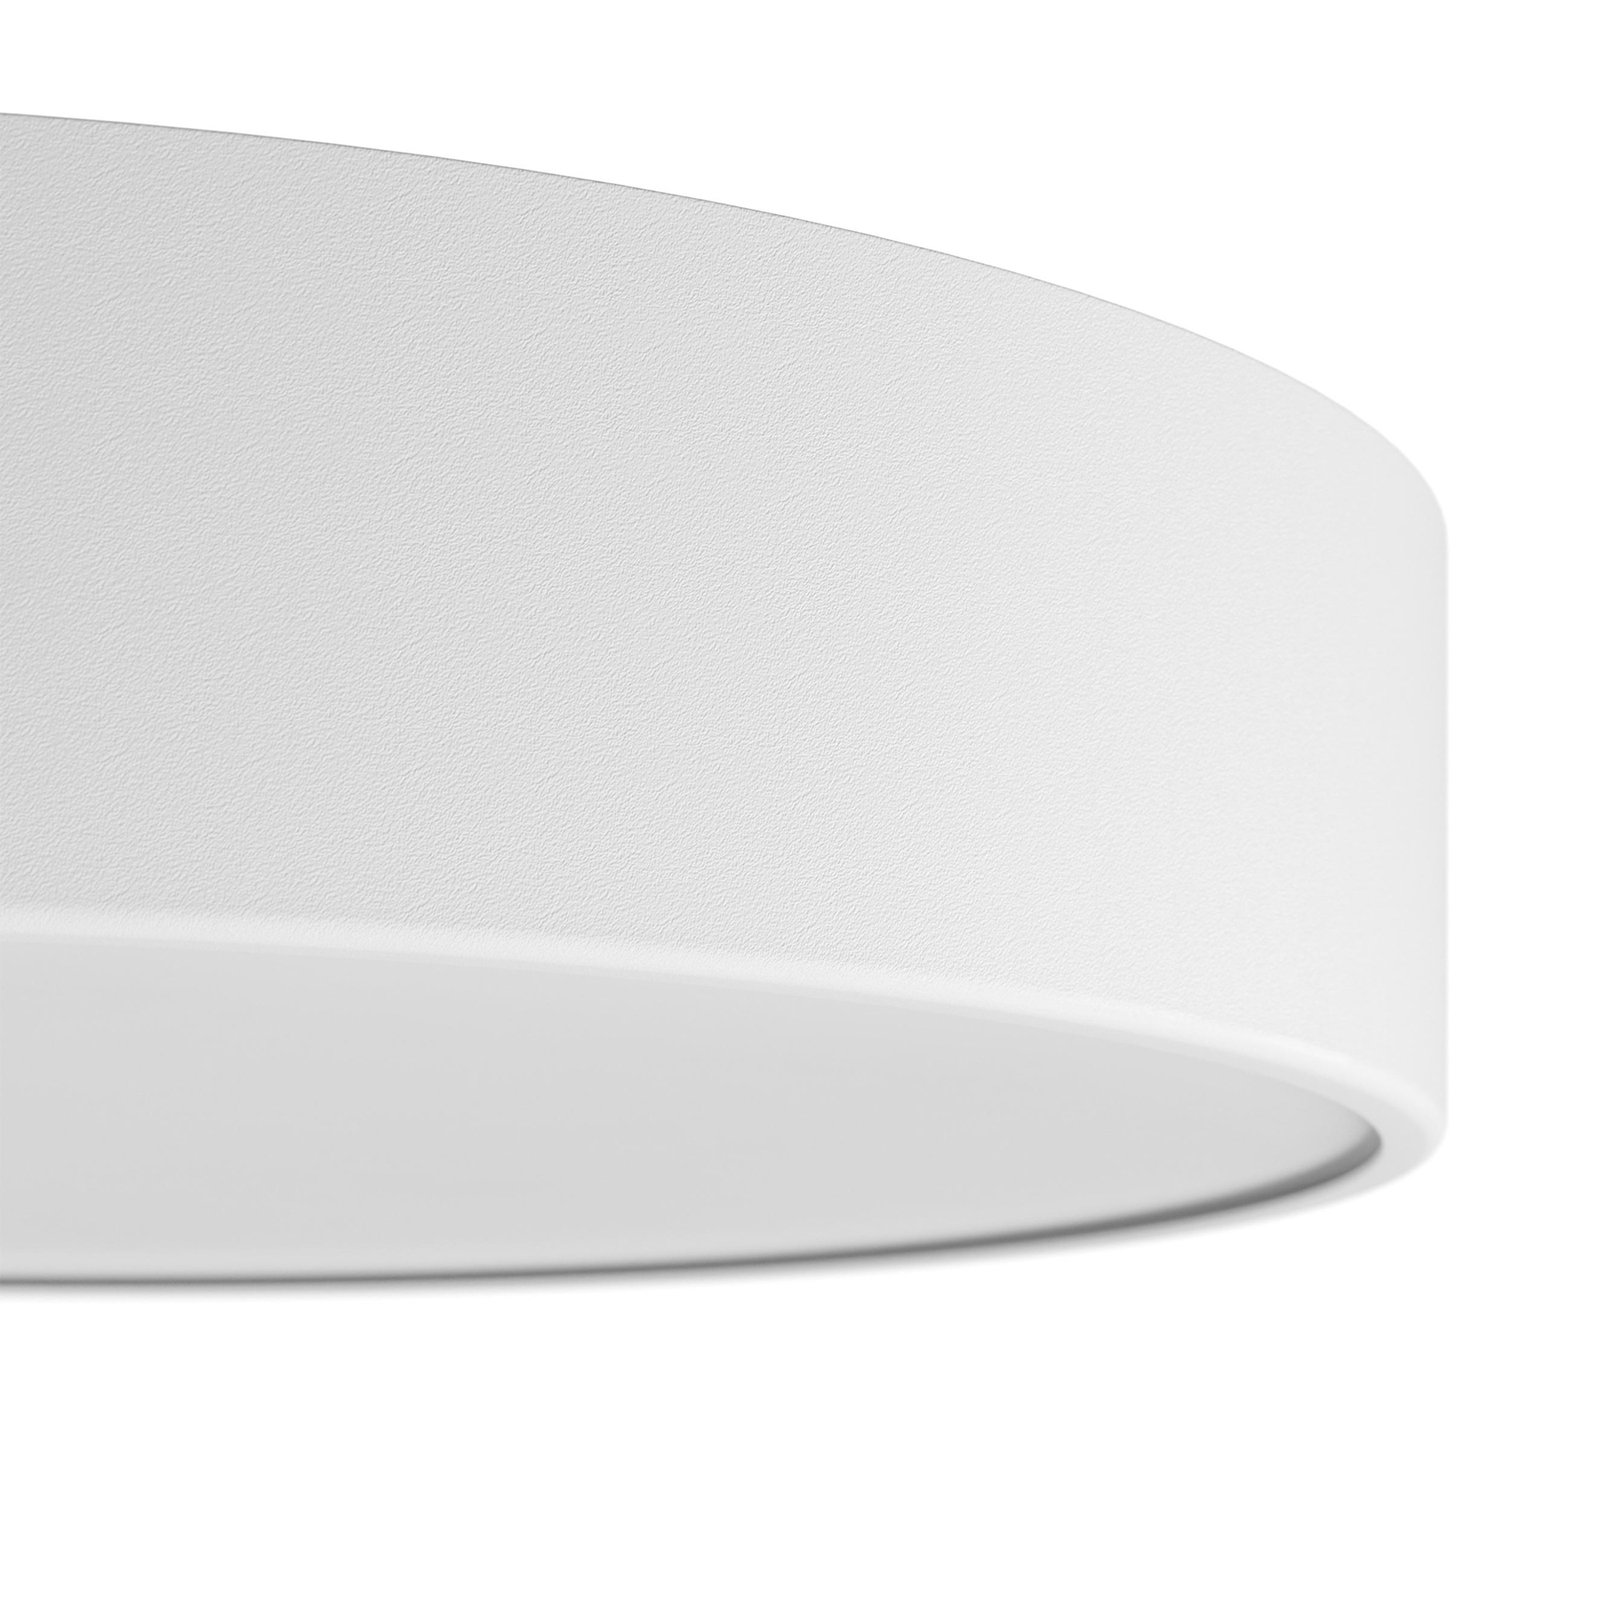 Cleo plafondlamp, wit, Ø 50 cm, metaal, IP54